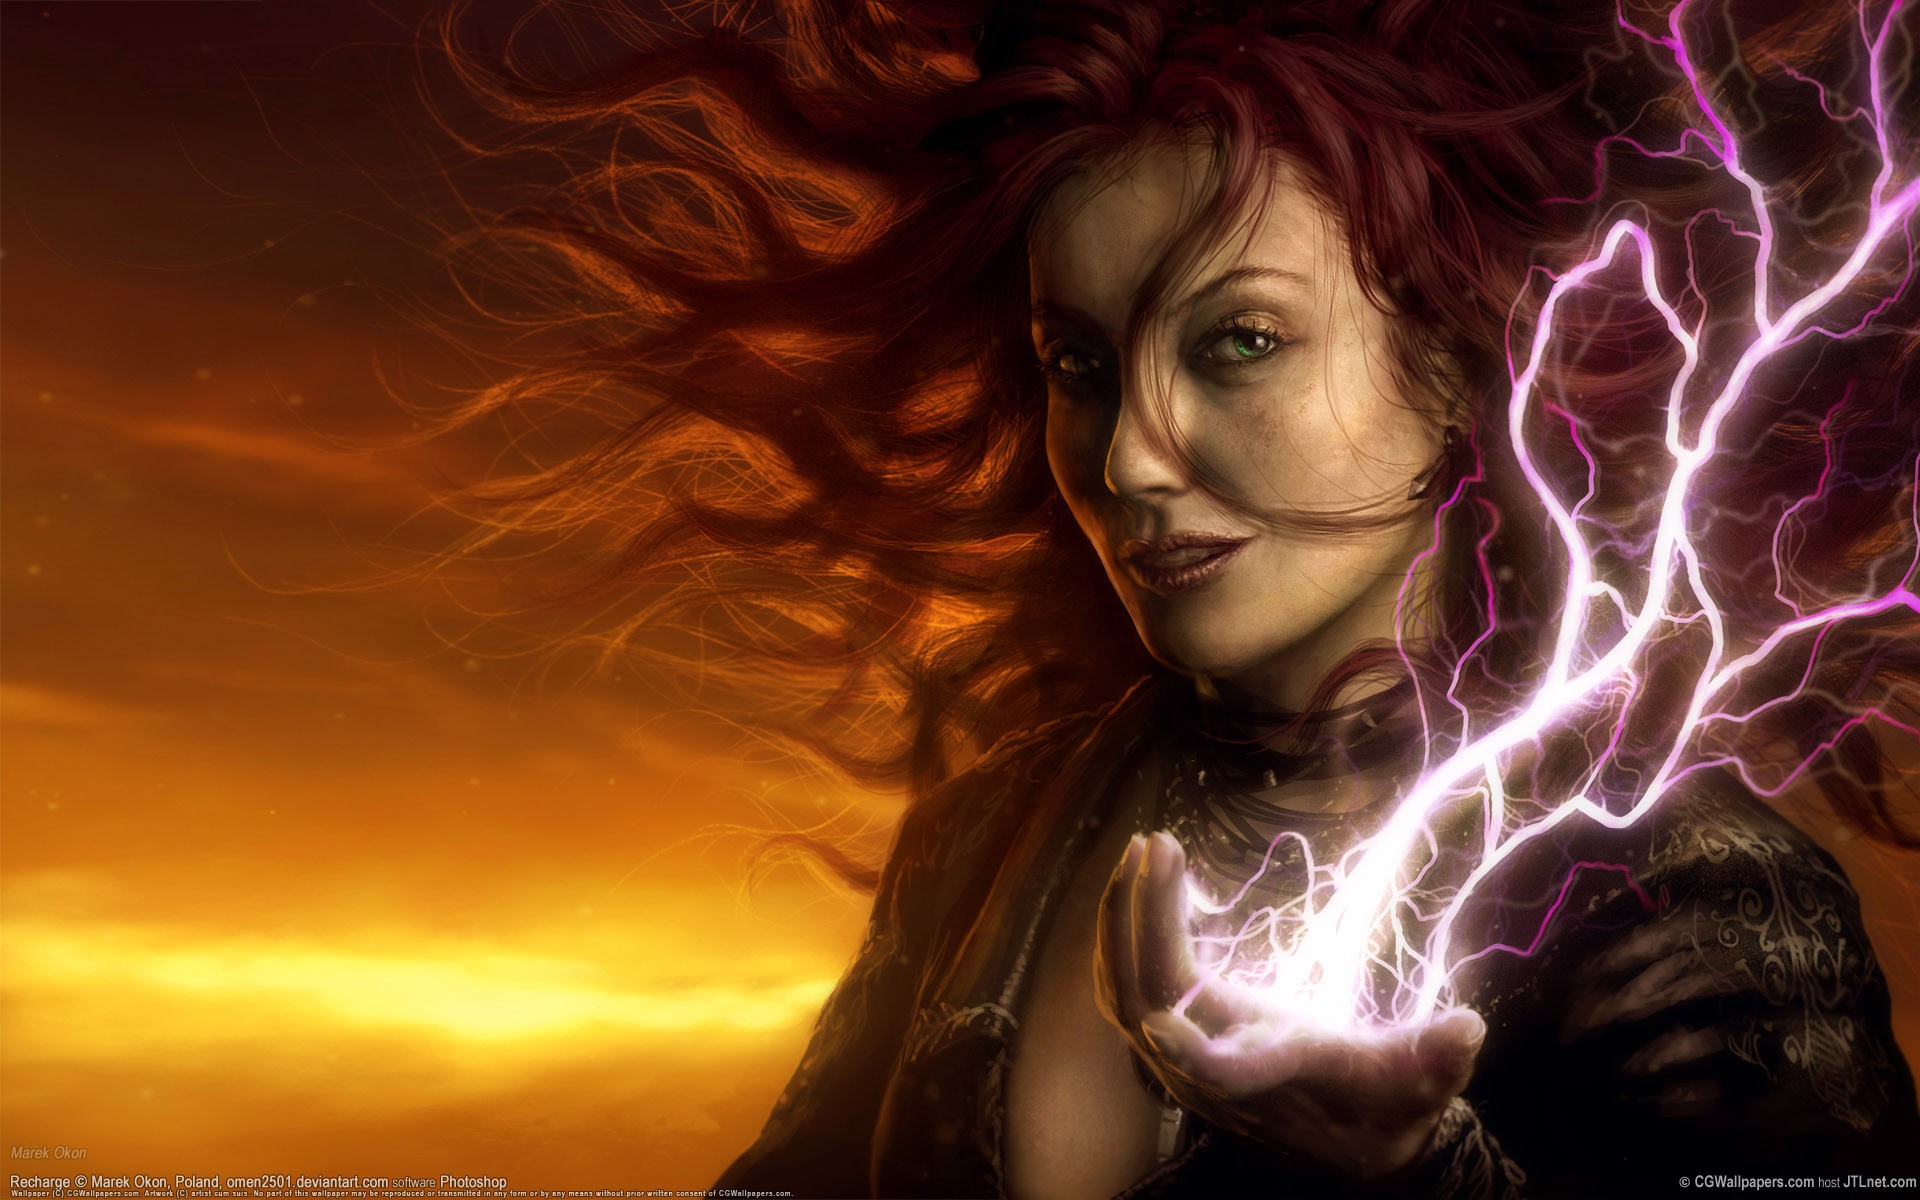 General 1920x1200 magic redhead photoshopped women fantasy art fantasy girl digital art watermarked